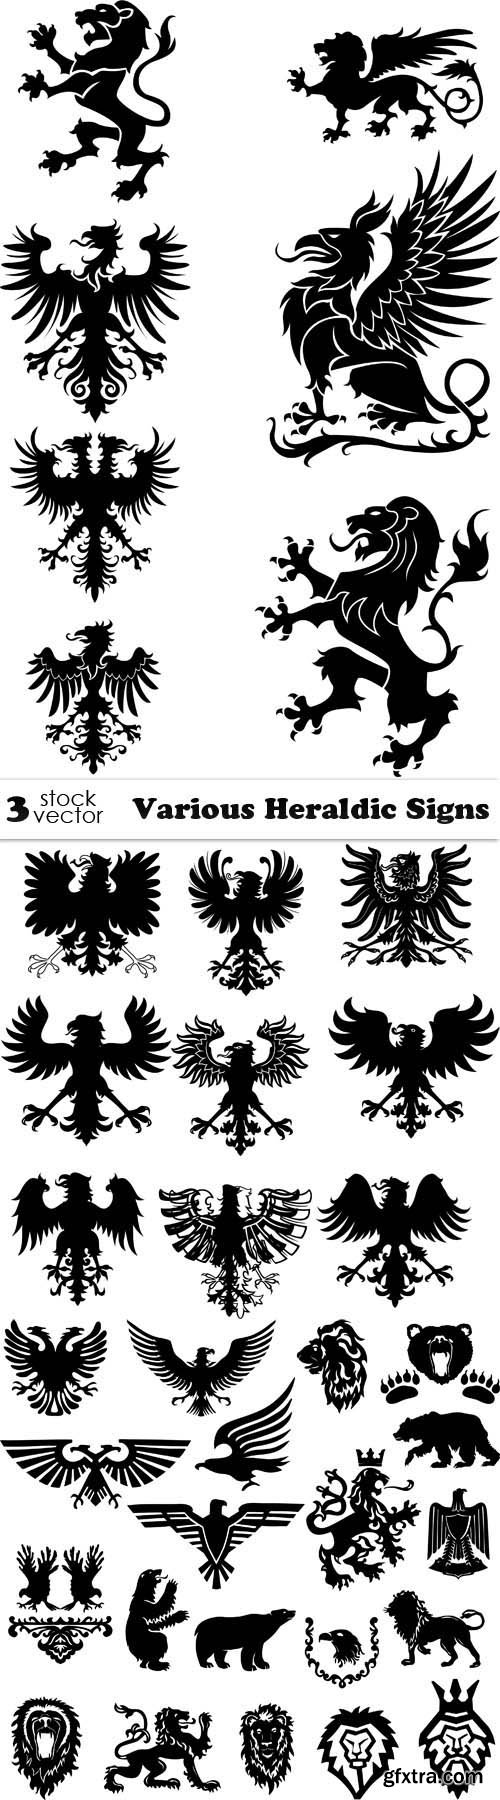 Vectors - Various Heraldic Signs